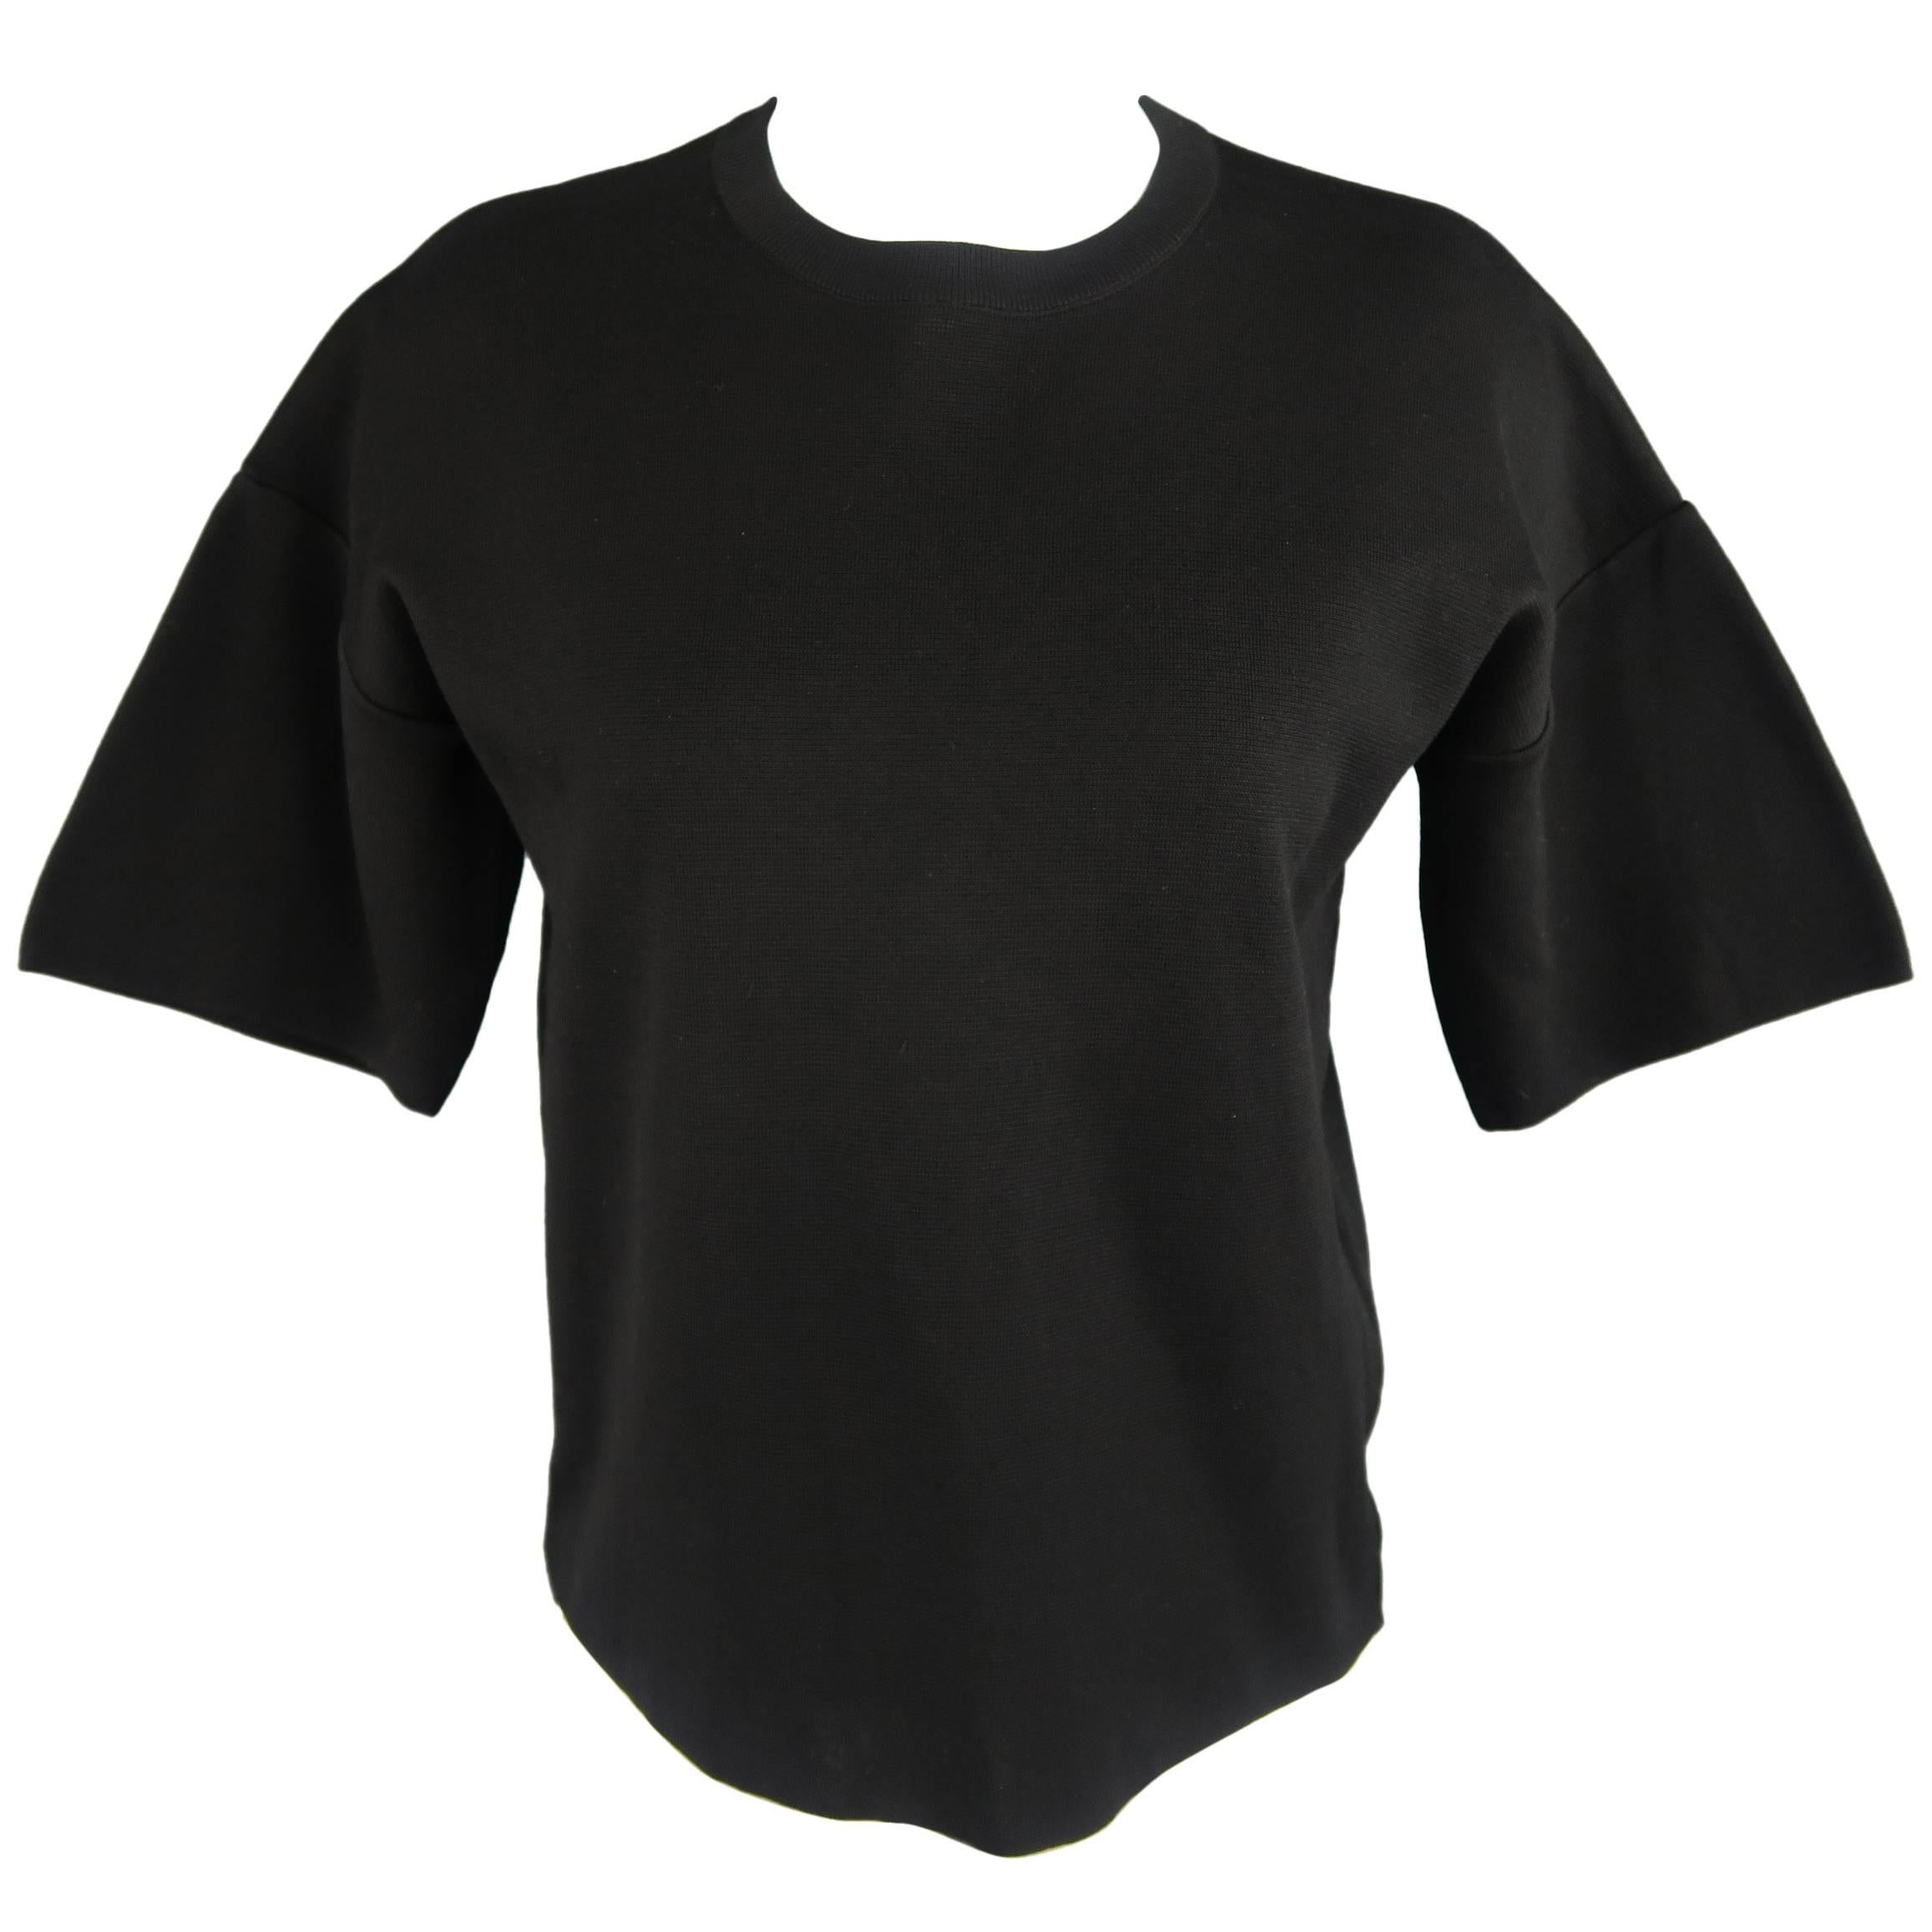 JIL SANDER Size S Black Cotton Knit Crewnek Short Sleeve Pullover